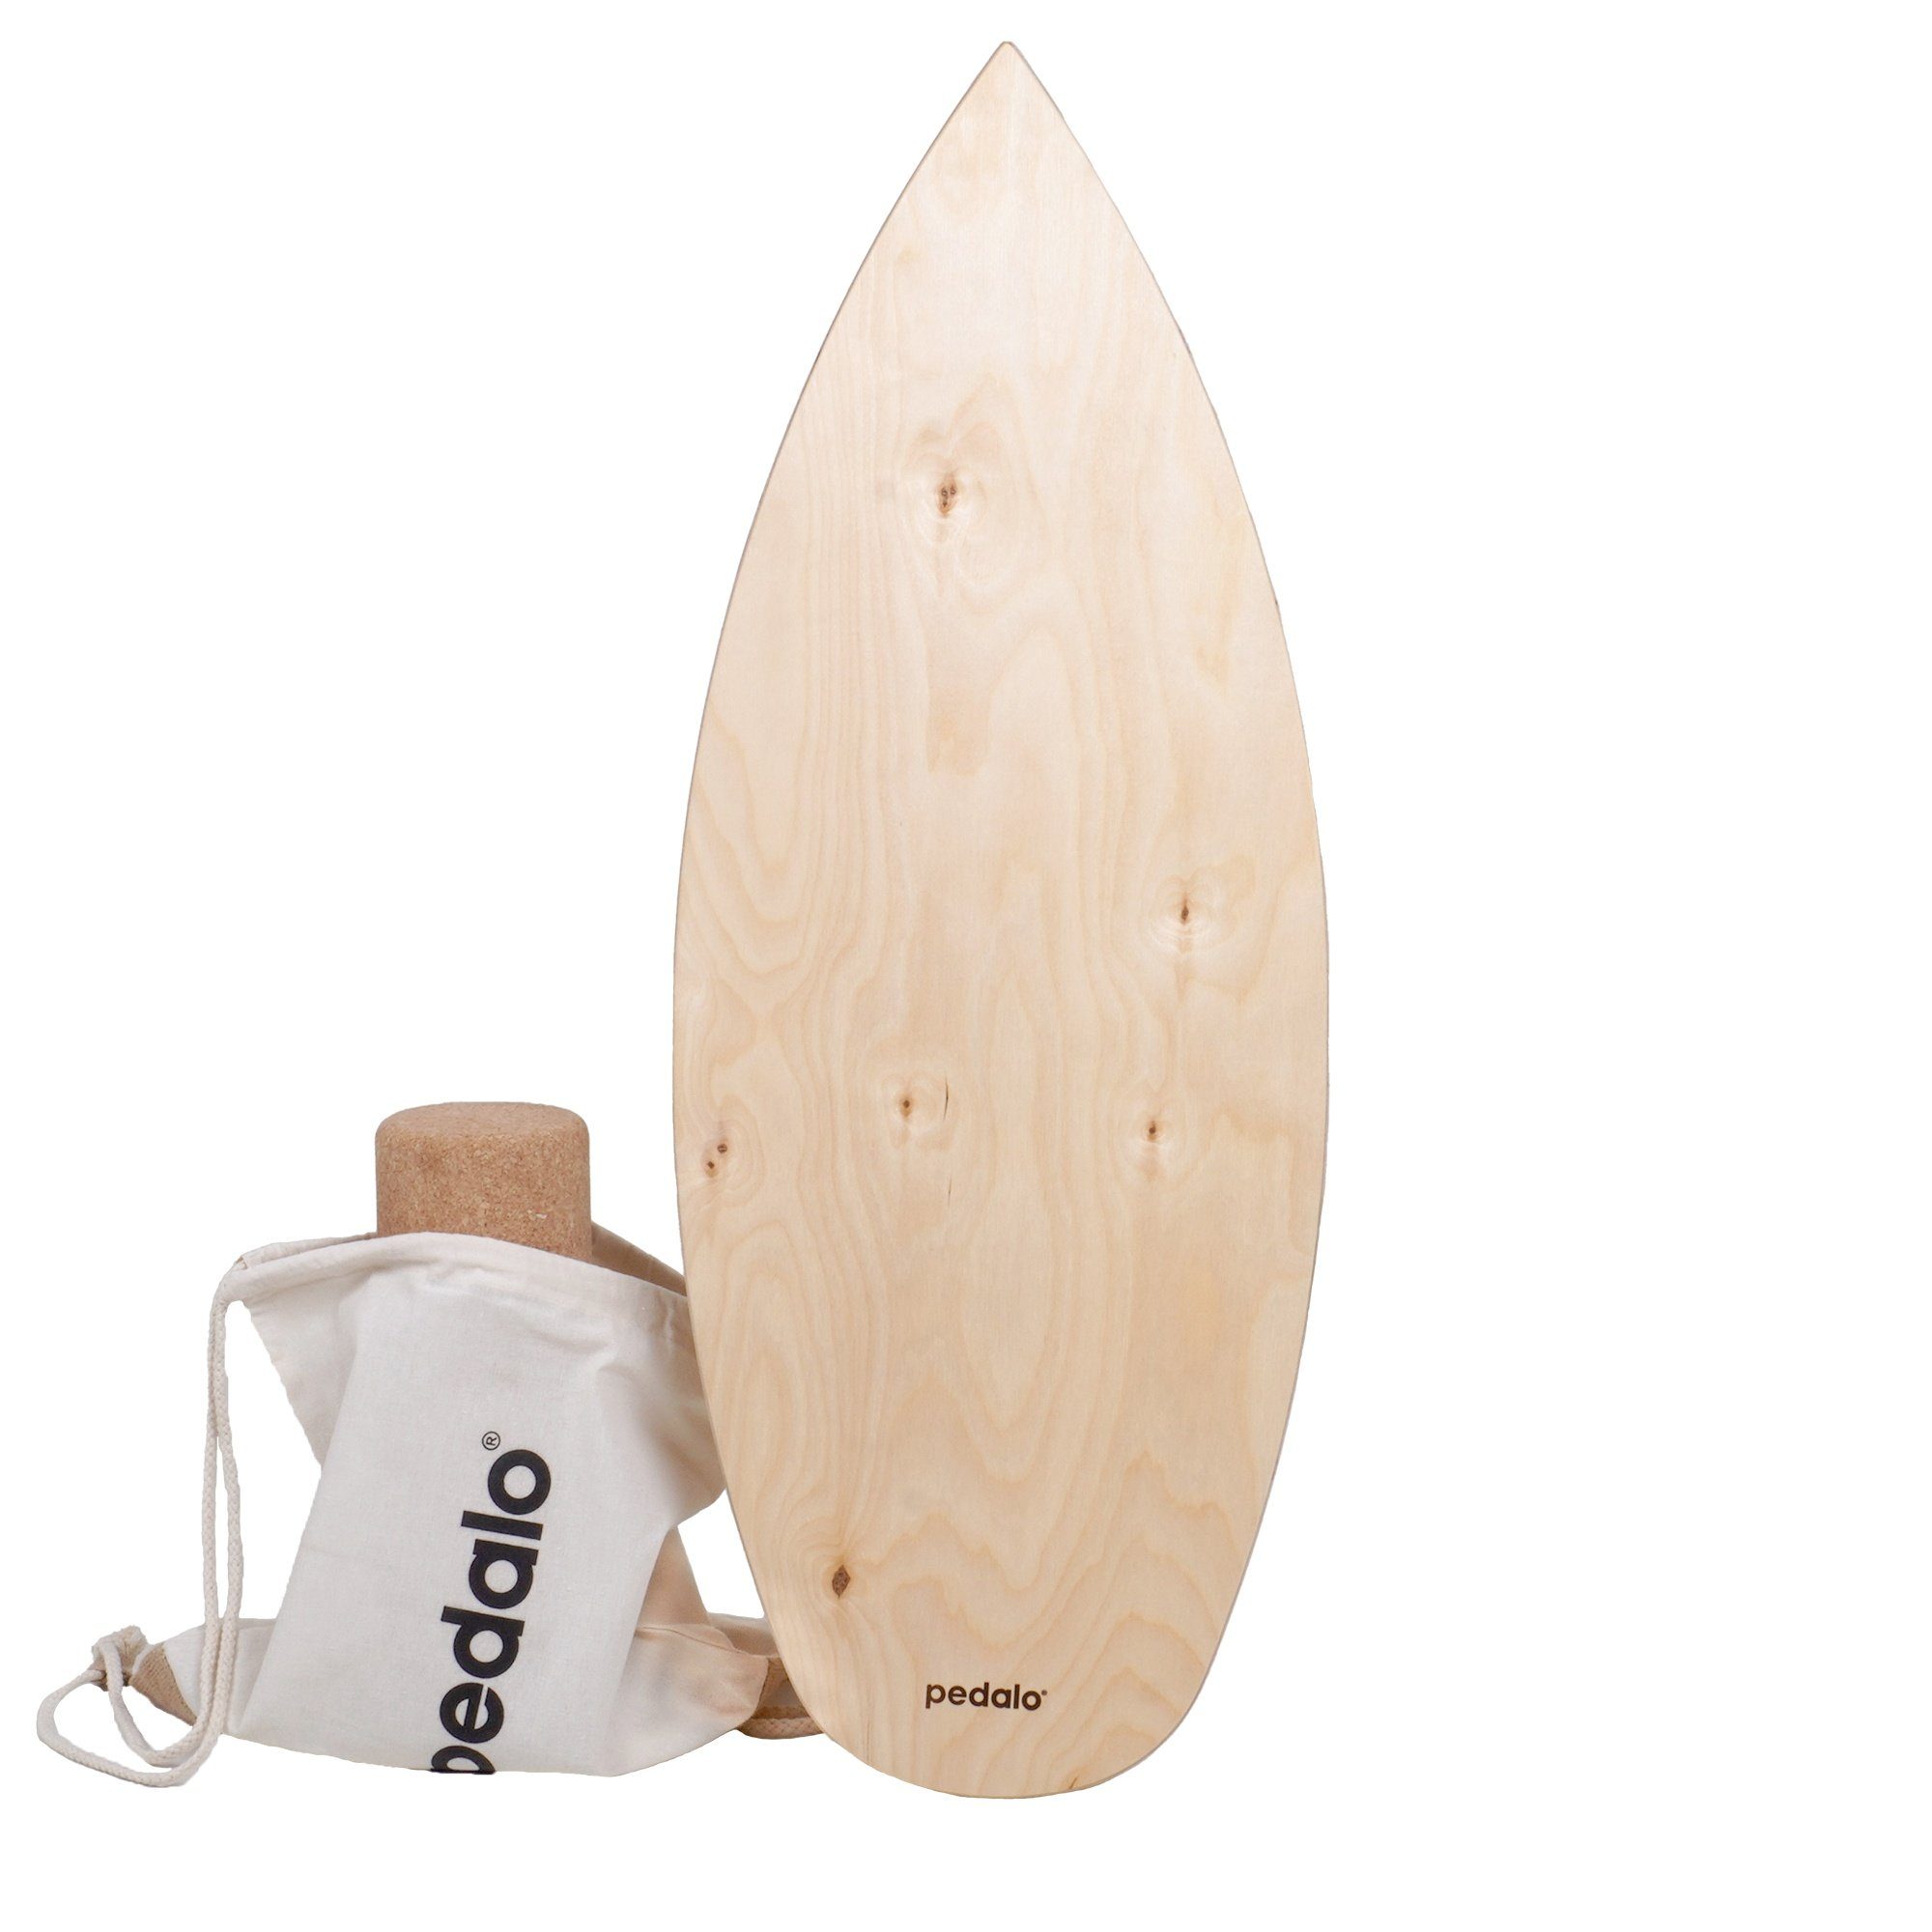 pedalo® Balanceboard 10 Oberfläche Board inkl. Board Koordinationstrainer, stabil, Holz Faszien cm, Gleichgewichtstrainer Balance Pur Korkrolle